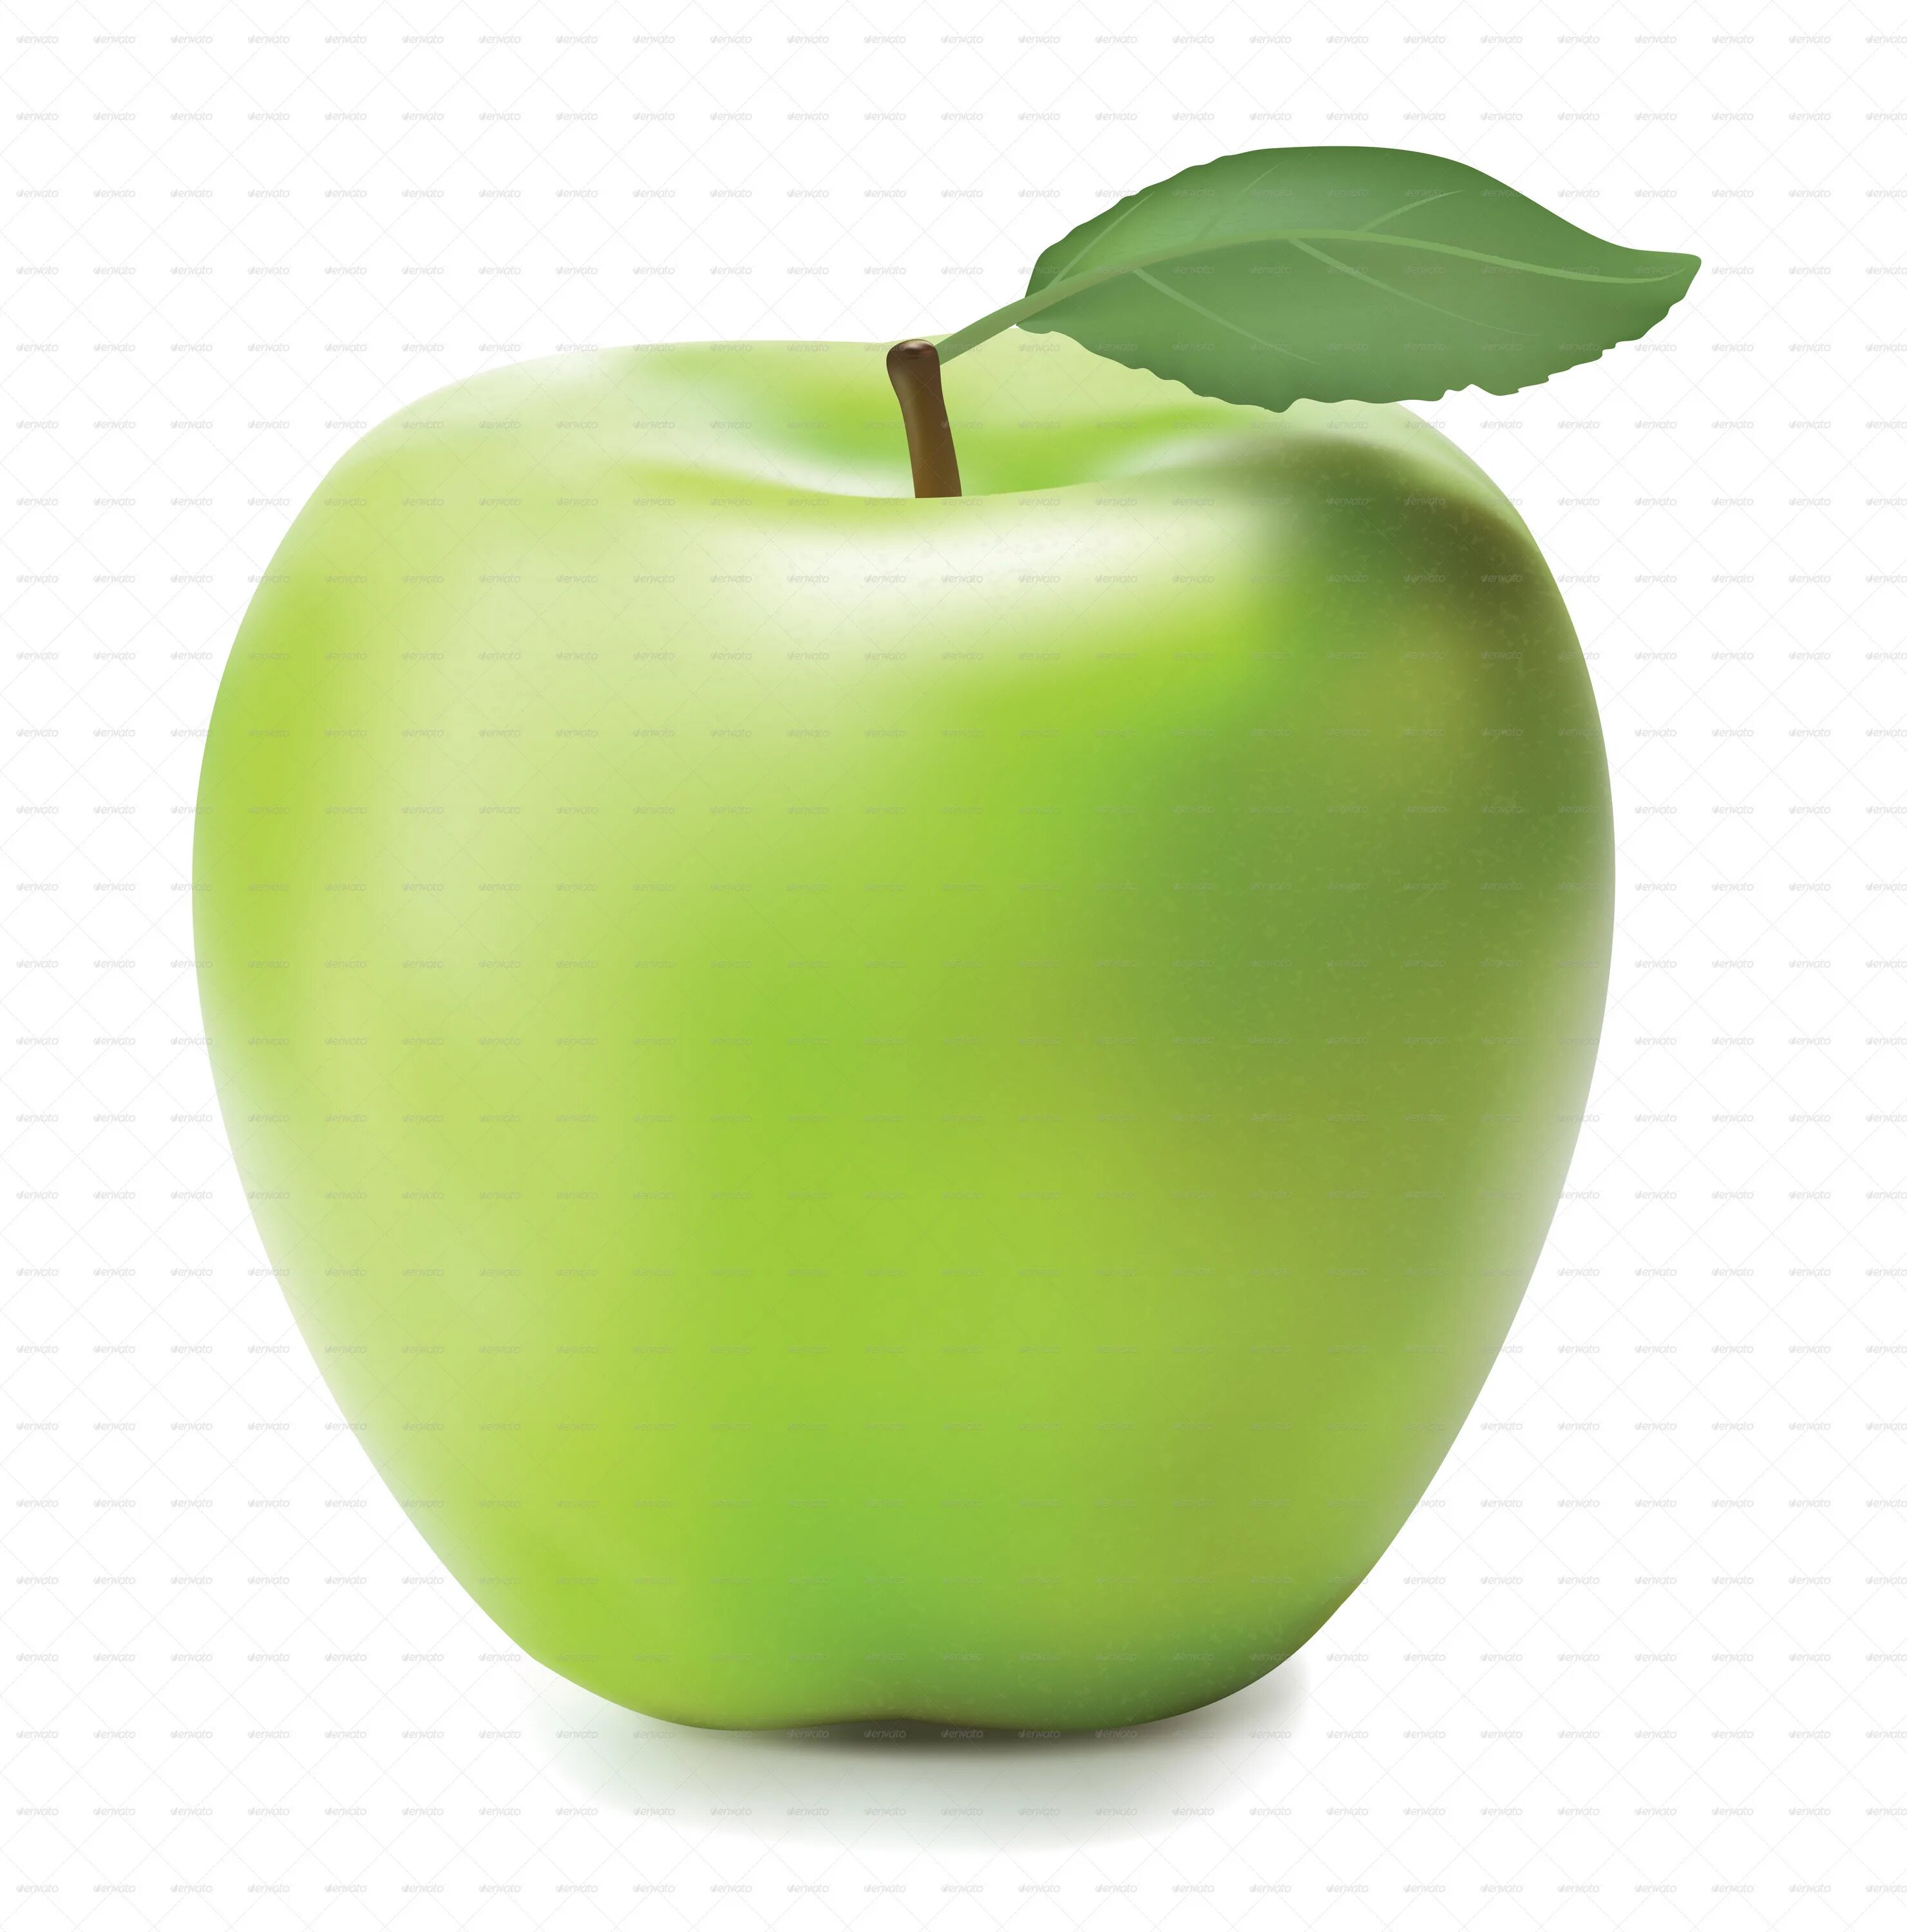 Я хочу зеленое яблоко прямо. Яблоки зеленые. Яблоко с листиком. Зеленое яблоко с листочком. Яблоко зеленое крупное на белом фоне.